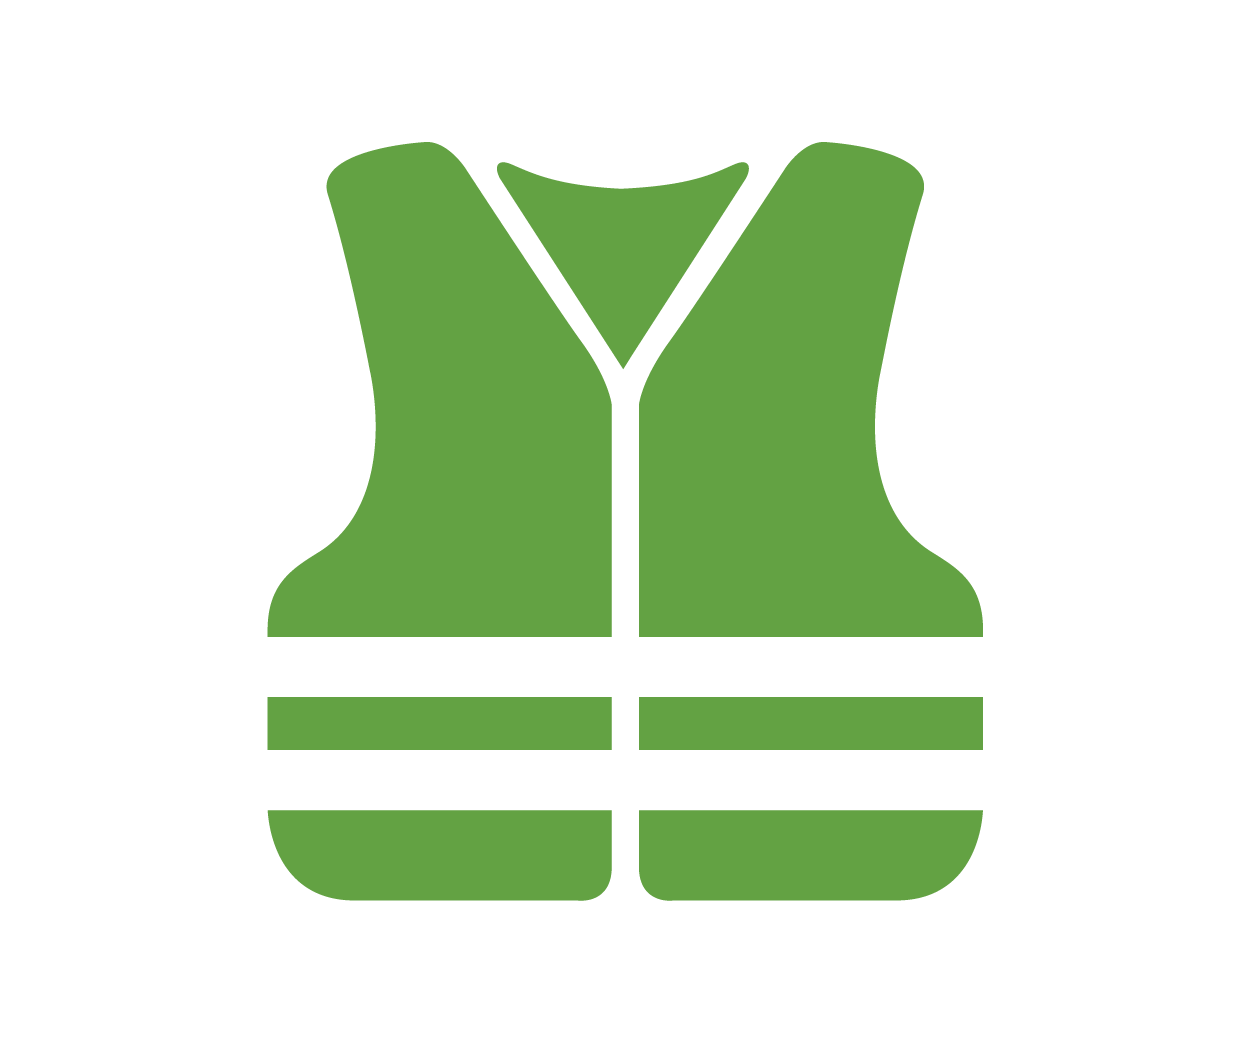 Safety vest icon